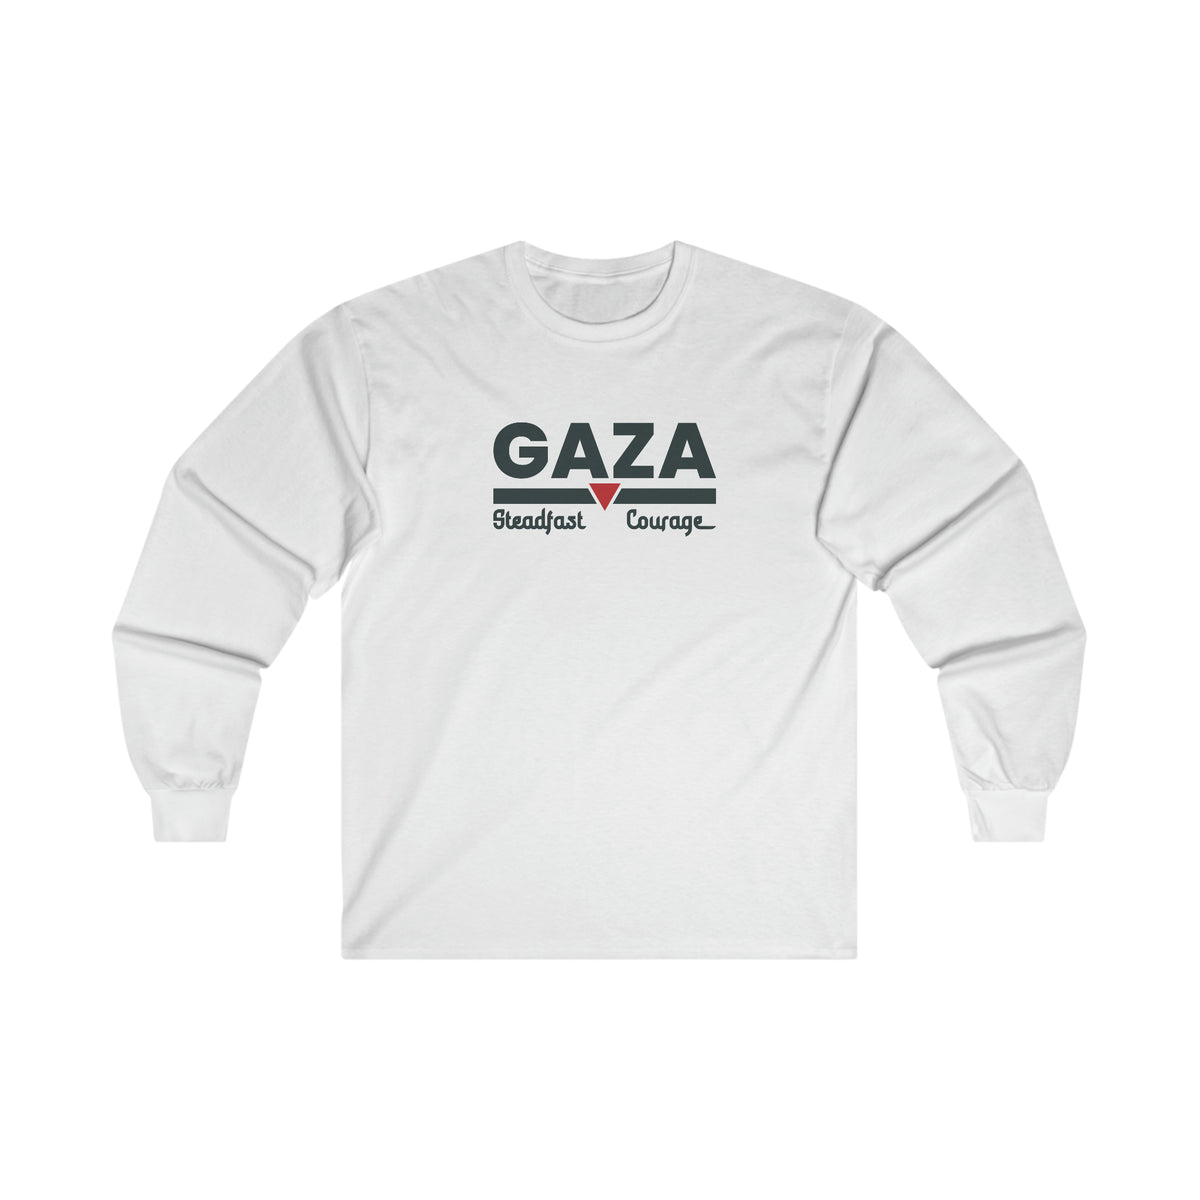 Gaza Courage LGY BK Long Sleeve Tee